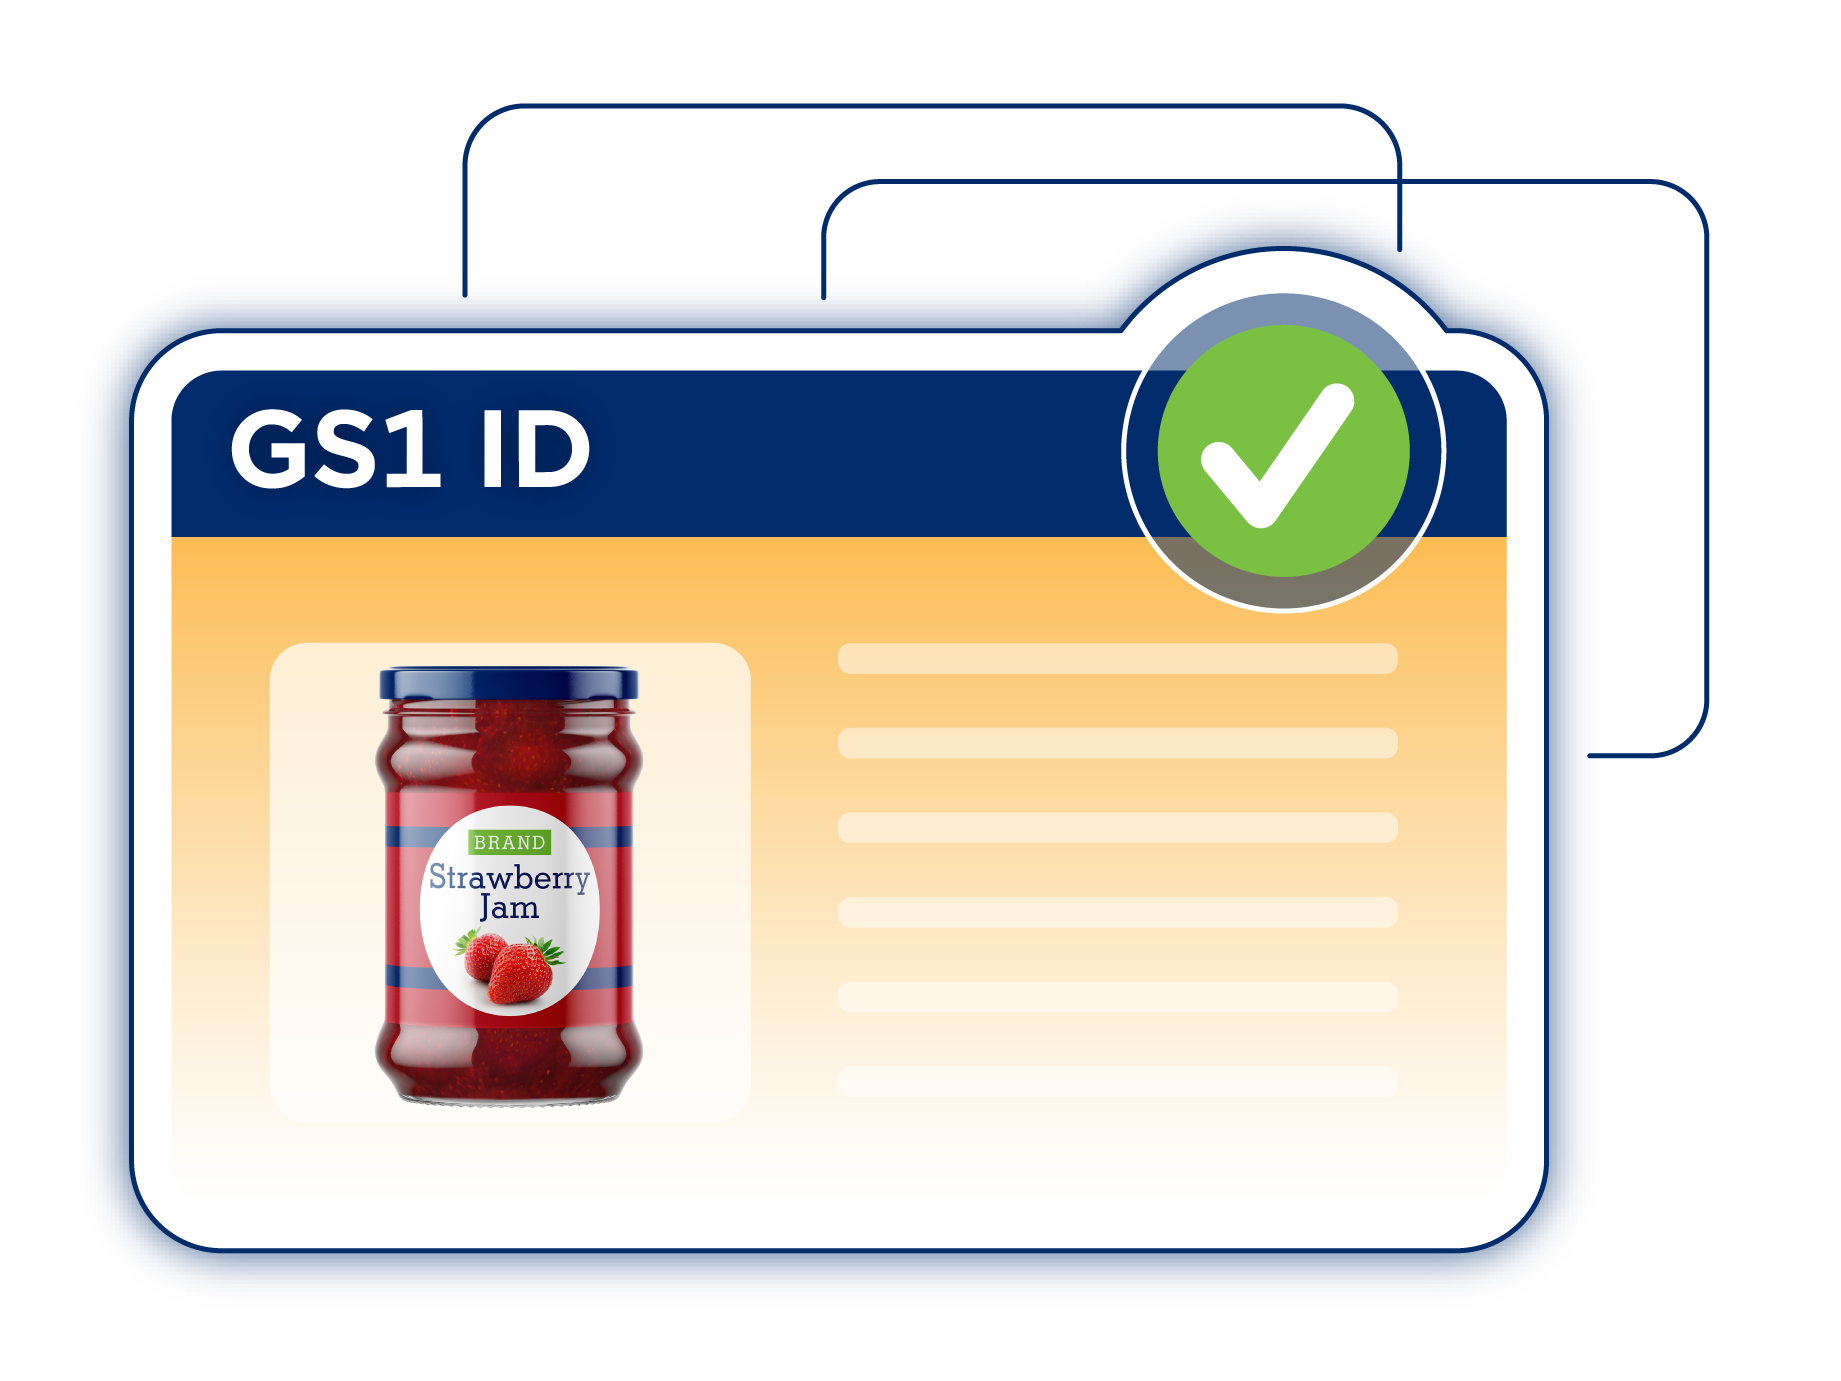 Verified by GS1 ID card